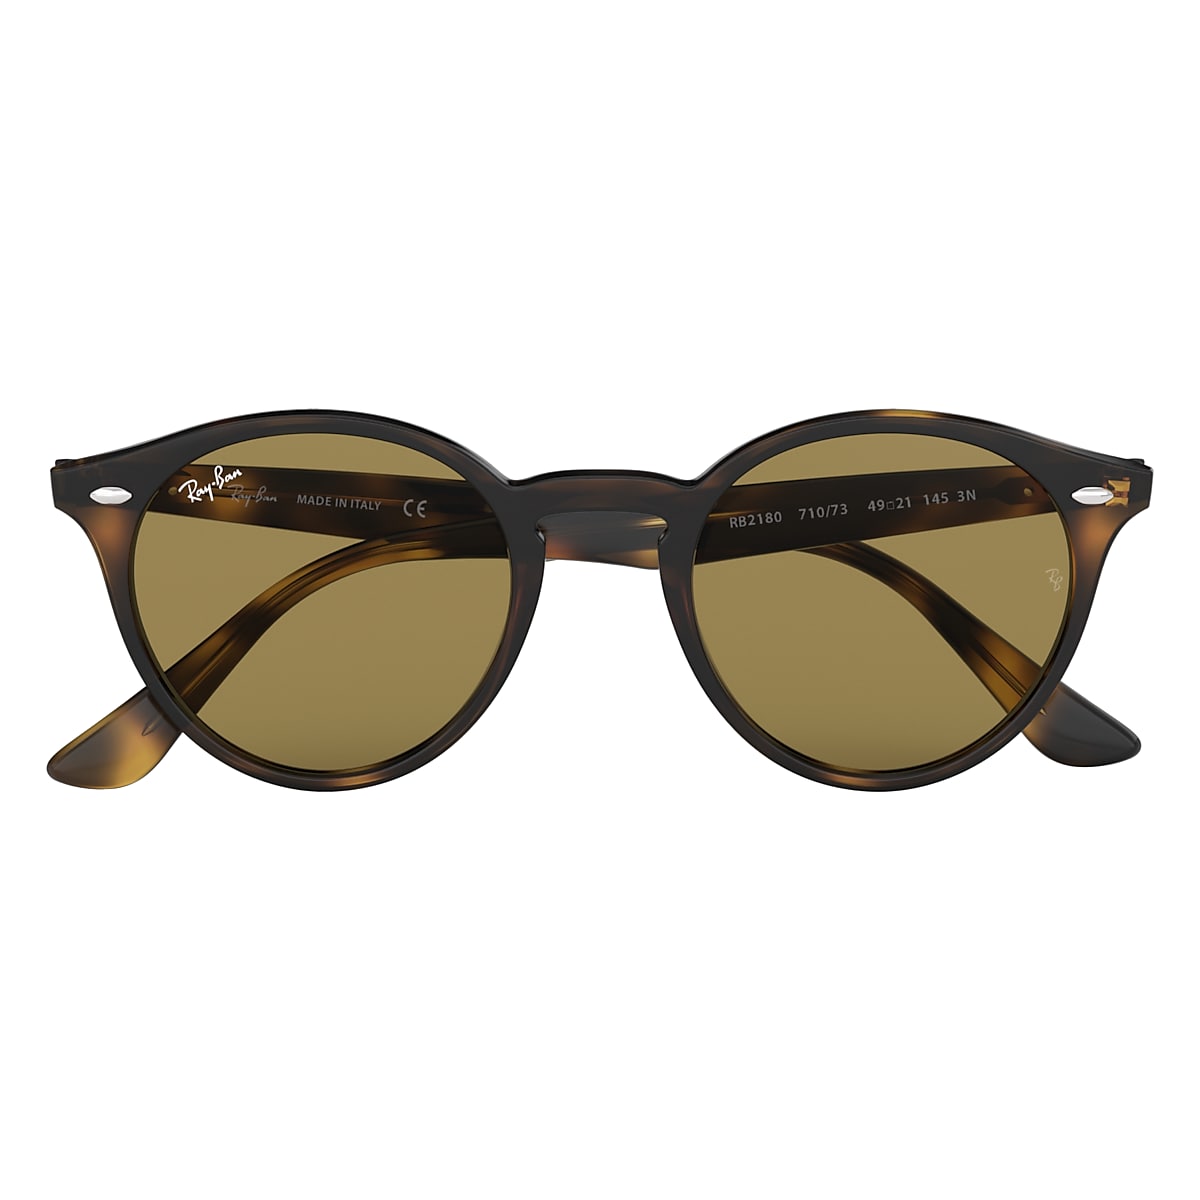 Rb2180 Sunglasses in Light Havana and Dark Brown | Ray-Ban®